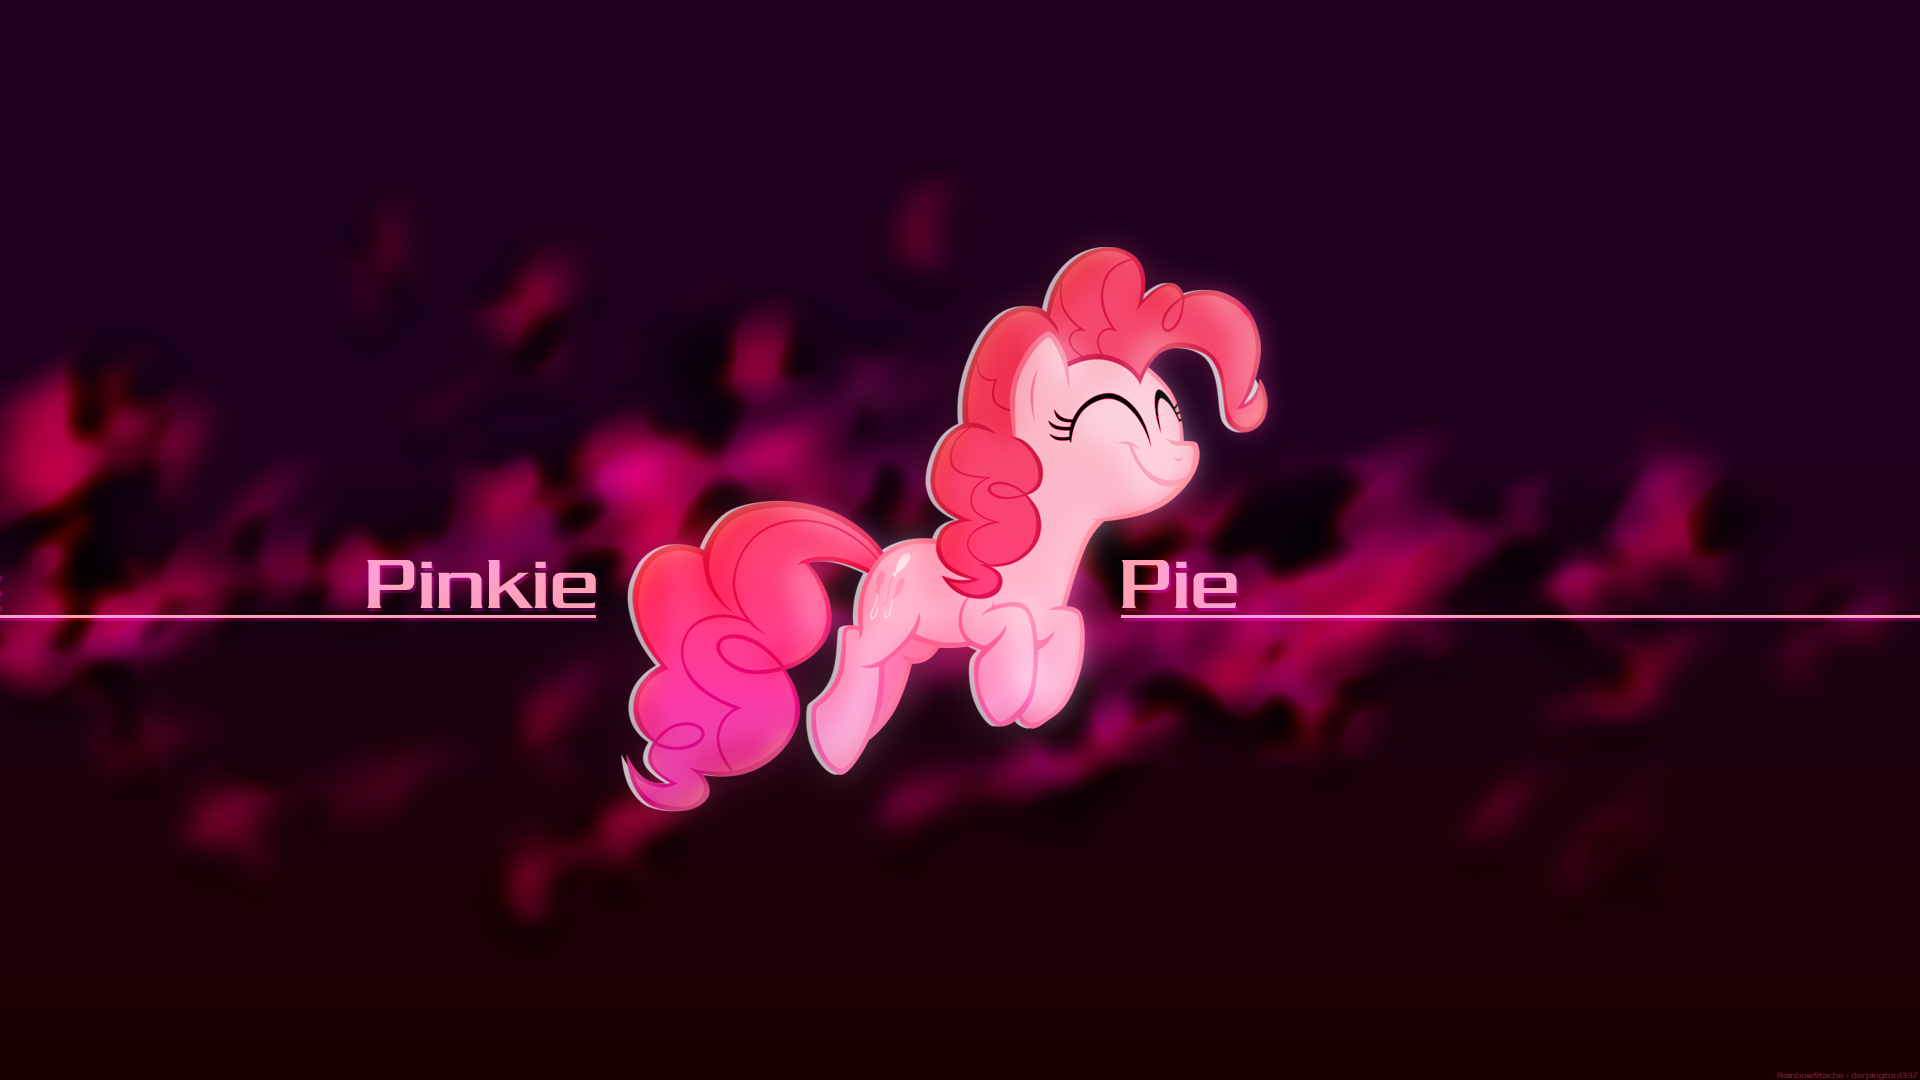 Pinkie Pie by derpington1337 and kas92